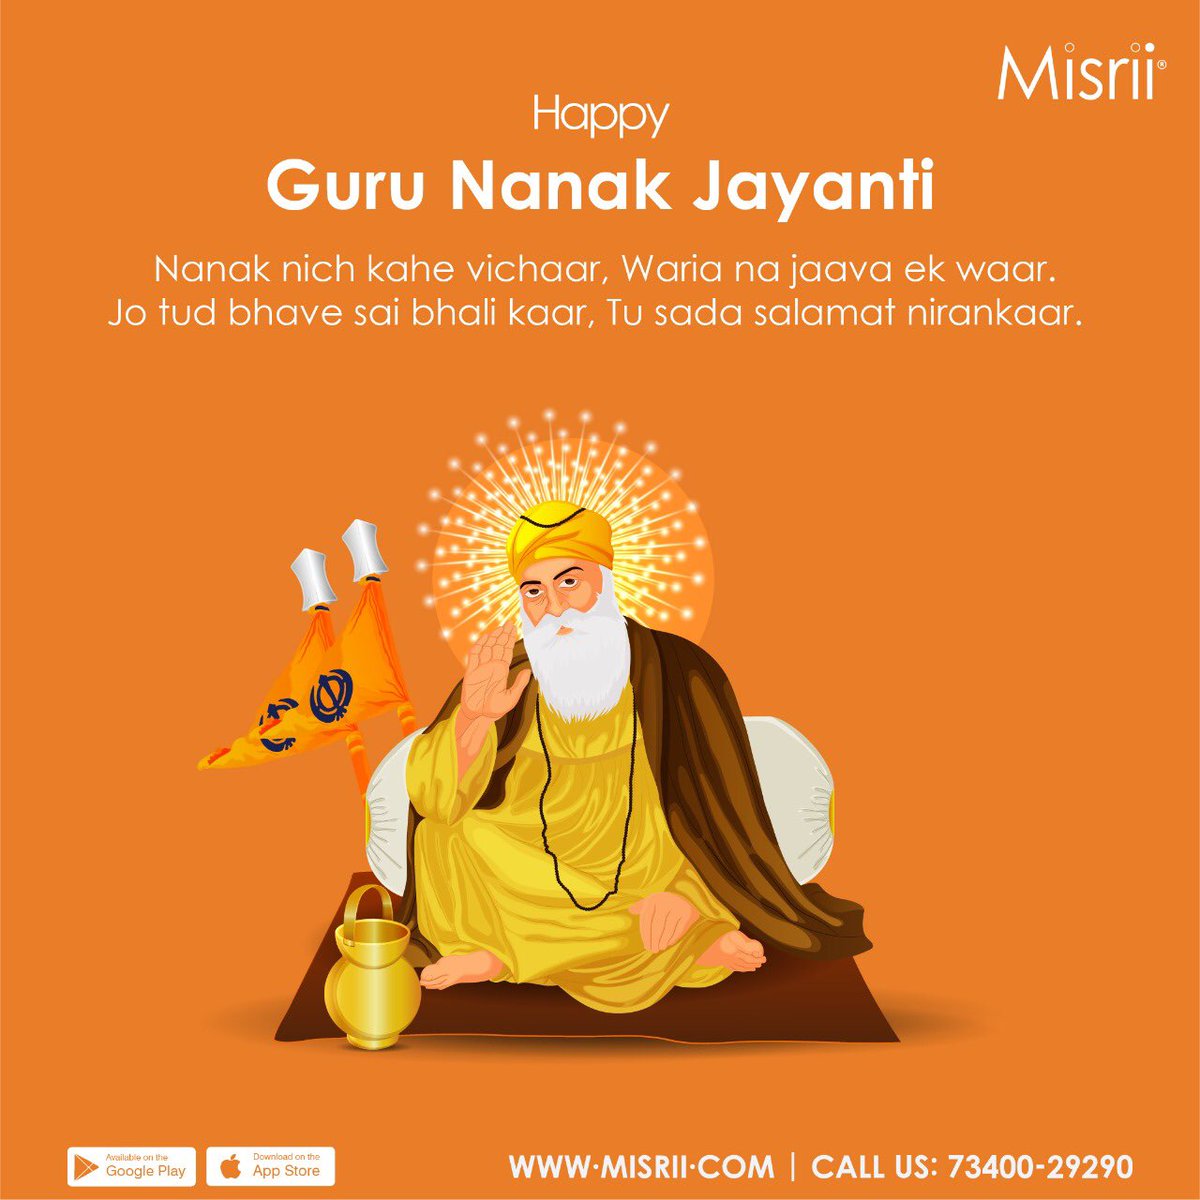 Happy Guru Nanak Jayanti ! Order Tasty, Healthy & Delicious Snacks On Misrii App bit.ly/2iKBGRo or via #Amazon Whatsapp: 7340029290 Visit: misrii.com #gurugobindsinghji #GuruNanakJayanti #gurunanak #misrii #jaipur